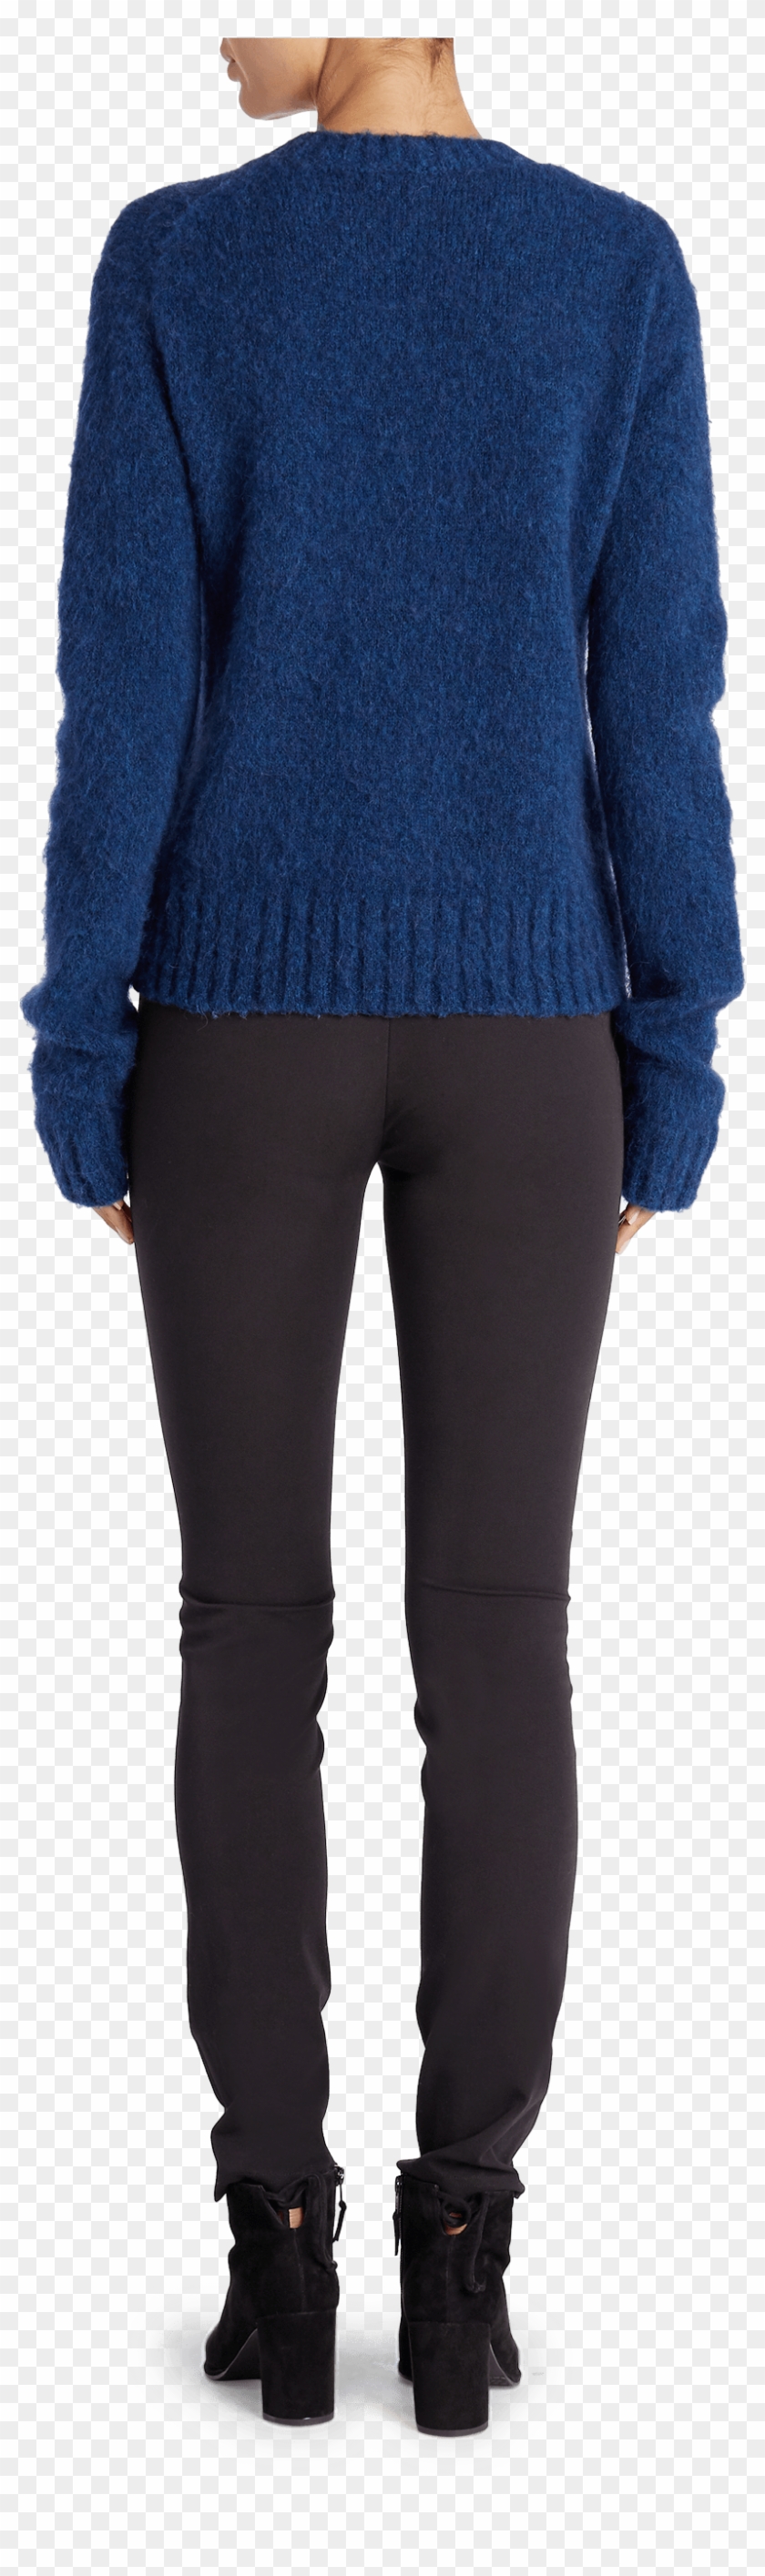 Brushed Crewneck Sweater Helmut Lang - Cardigan Clipart #4490645